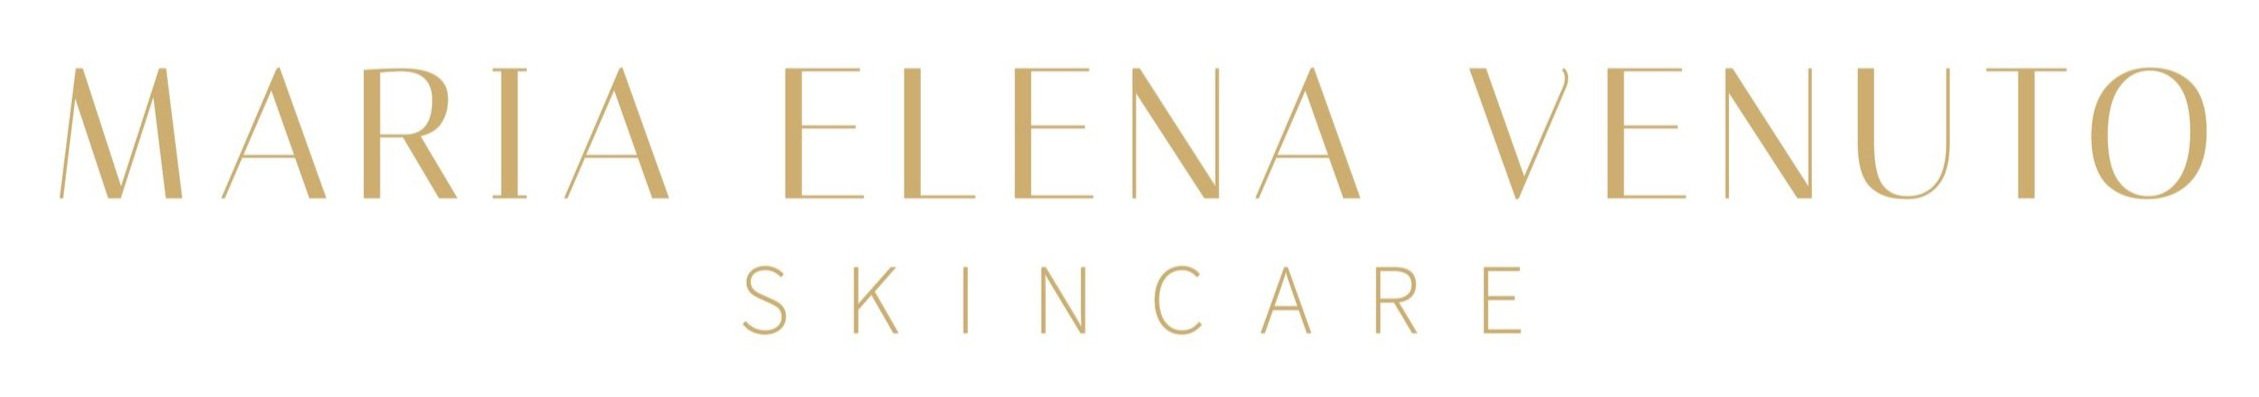 MEV Skincare marchio MARIA ELENA VENUTO logo